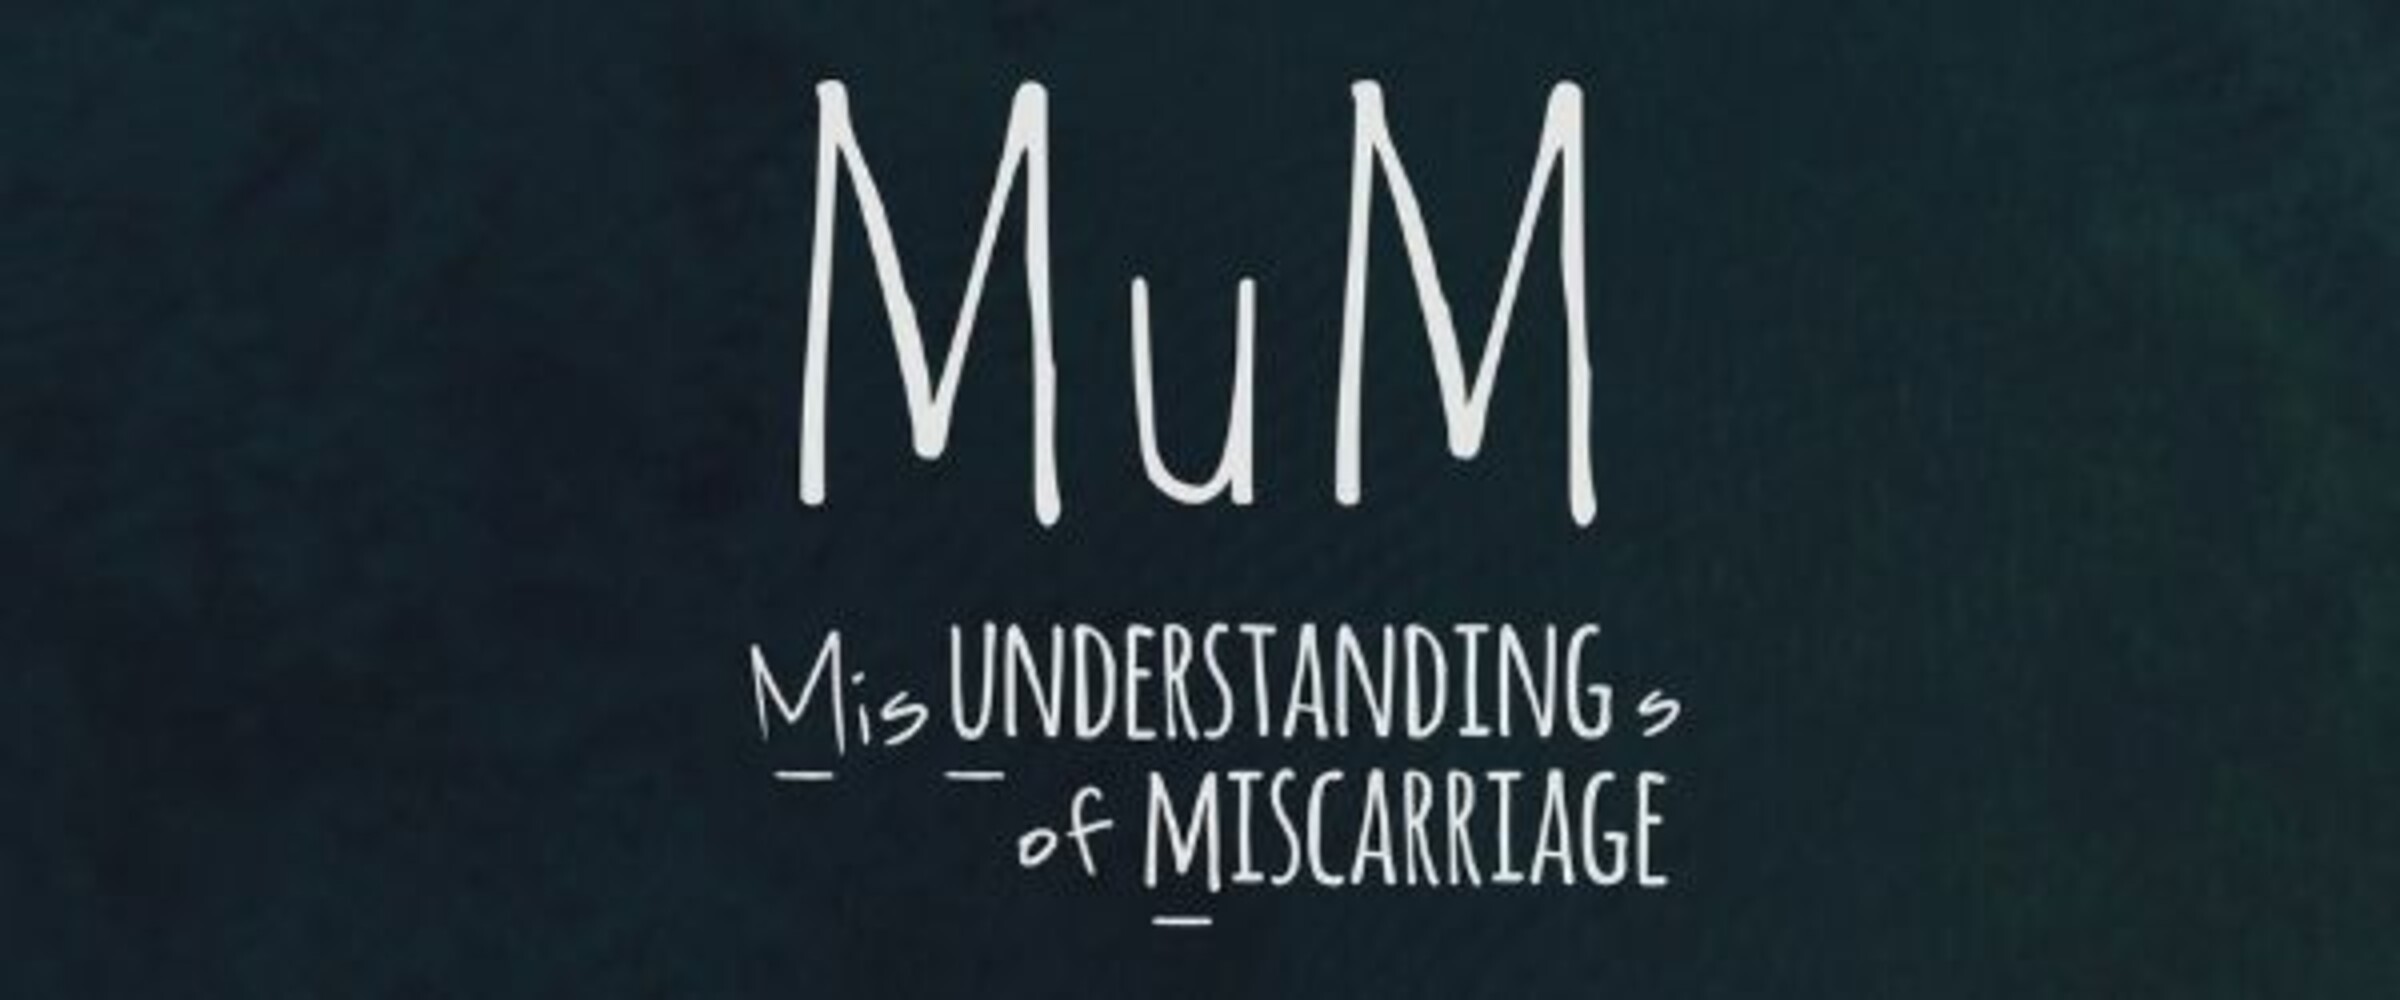 Misunderstandings of Miscarriage Documentary